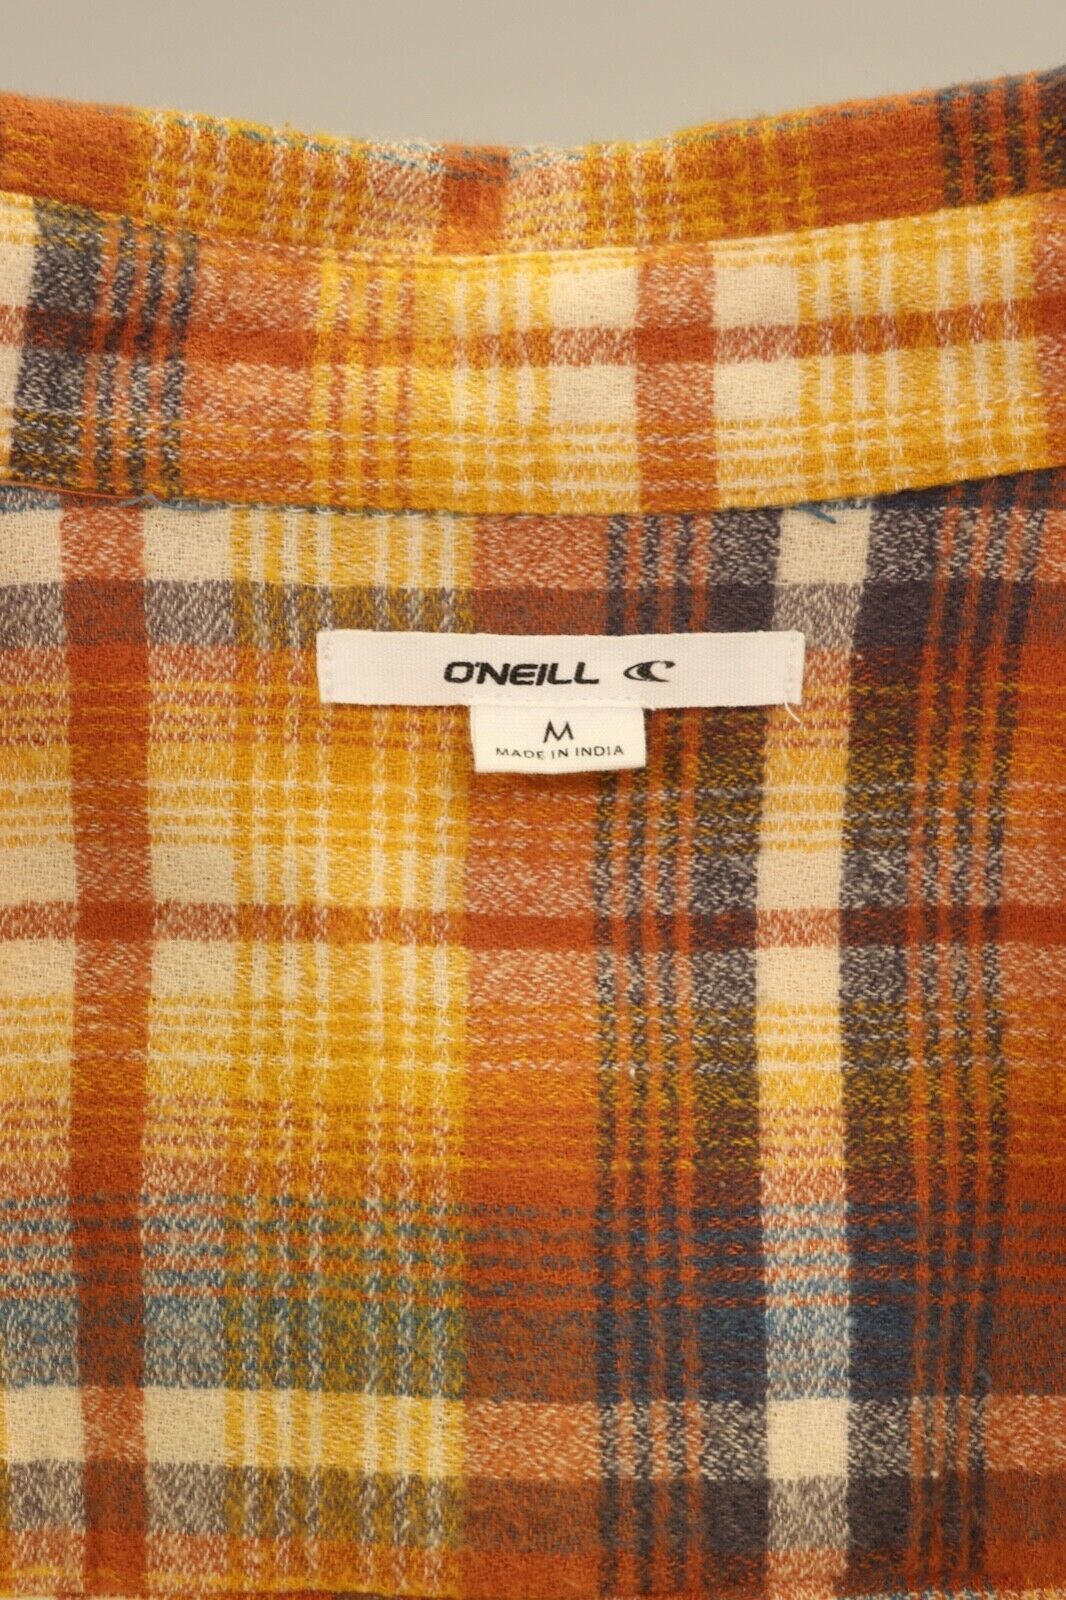 O'Neill Women's Flannel Shirt Sunshine Yellow Coat Check L/S (S15)